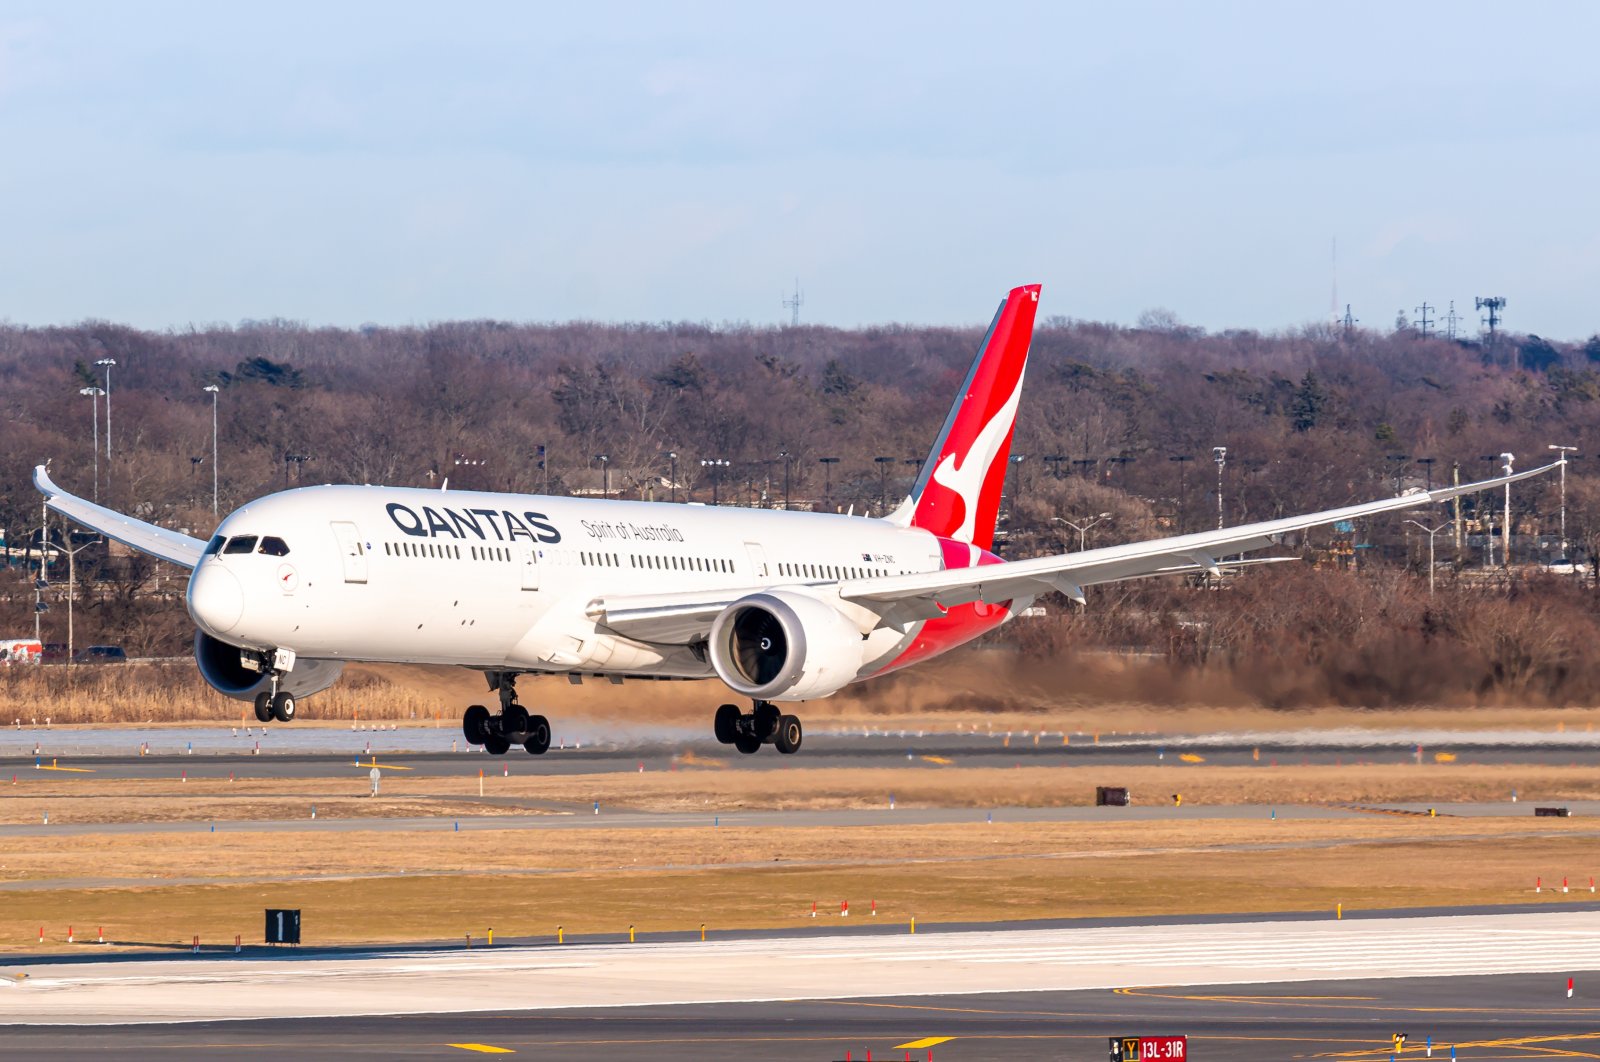 A Qantas Airways Boeing 787 Dreamliner airplane at New York John F. Kennedy airport (JFK) in New York, U.S., Feb. 27, 2020. (Shutterstock Photo)